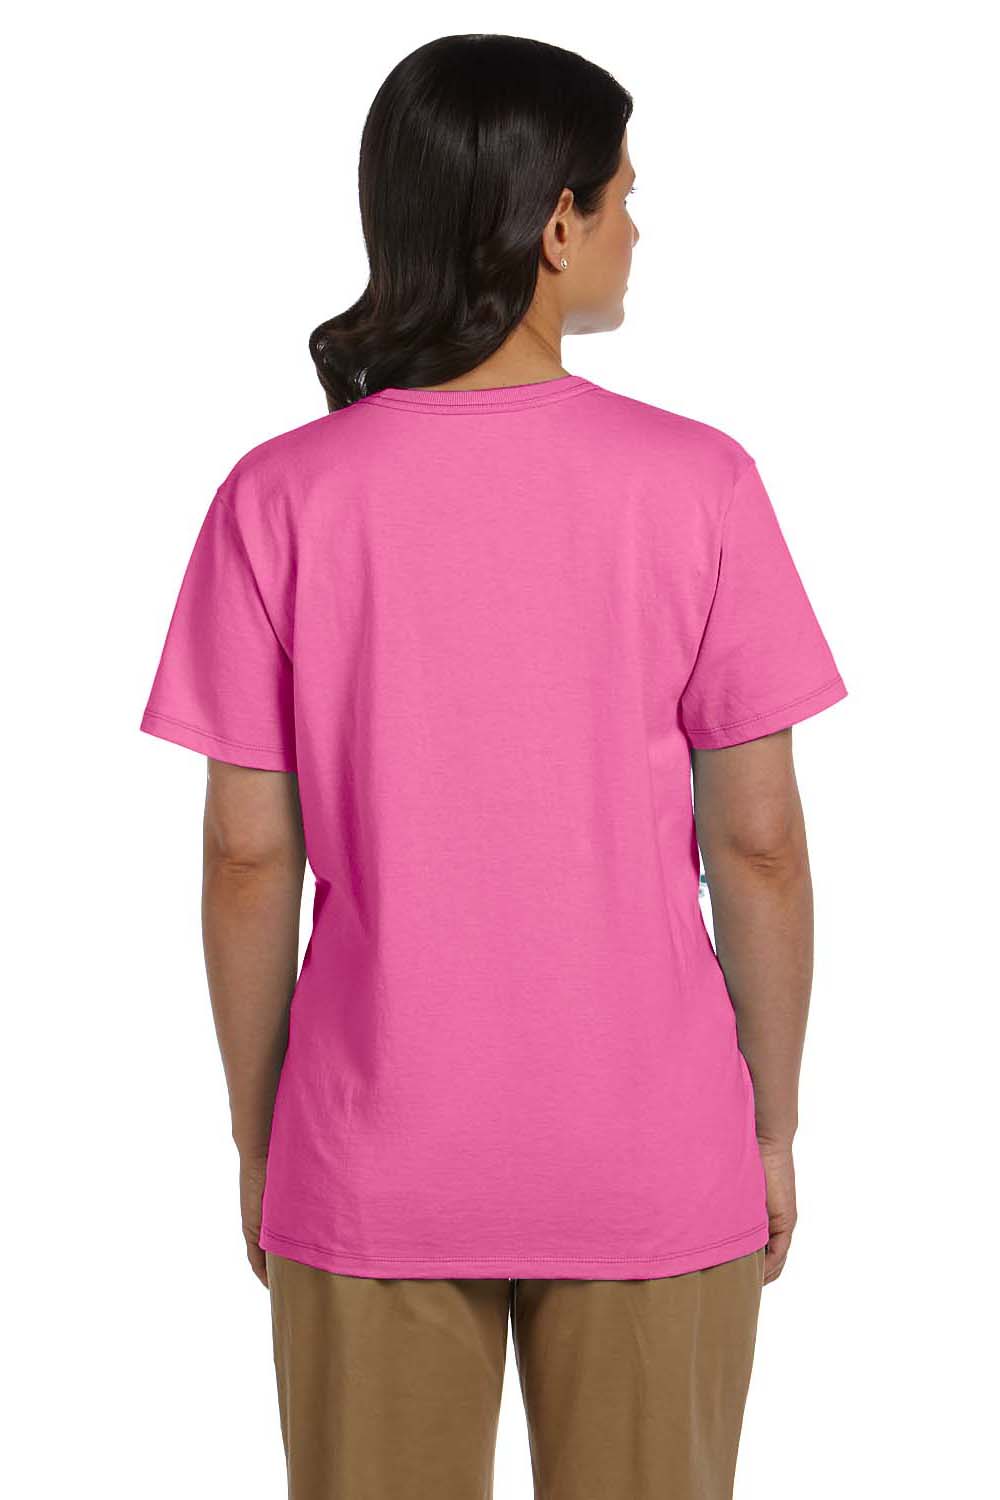 Hanes 5780 Womens ComfortSoft Short Sleeve V-Neck T-Shirt Pink Back